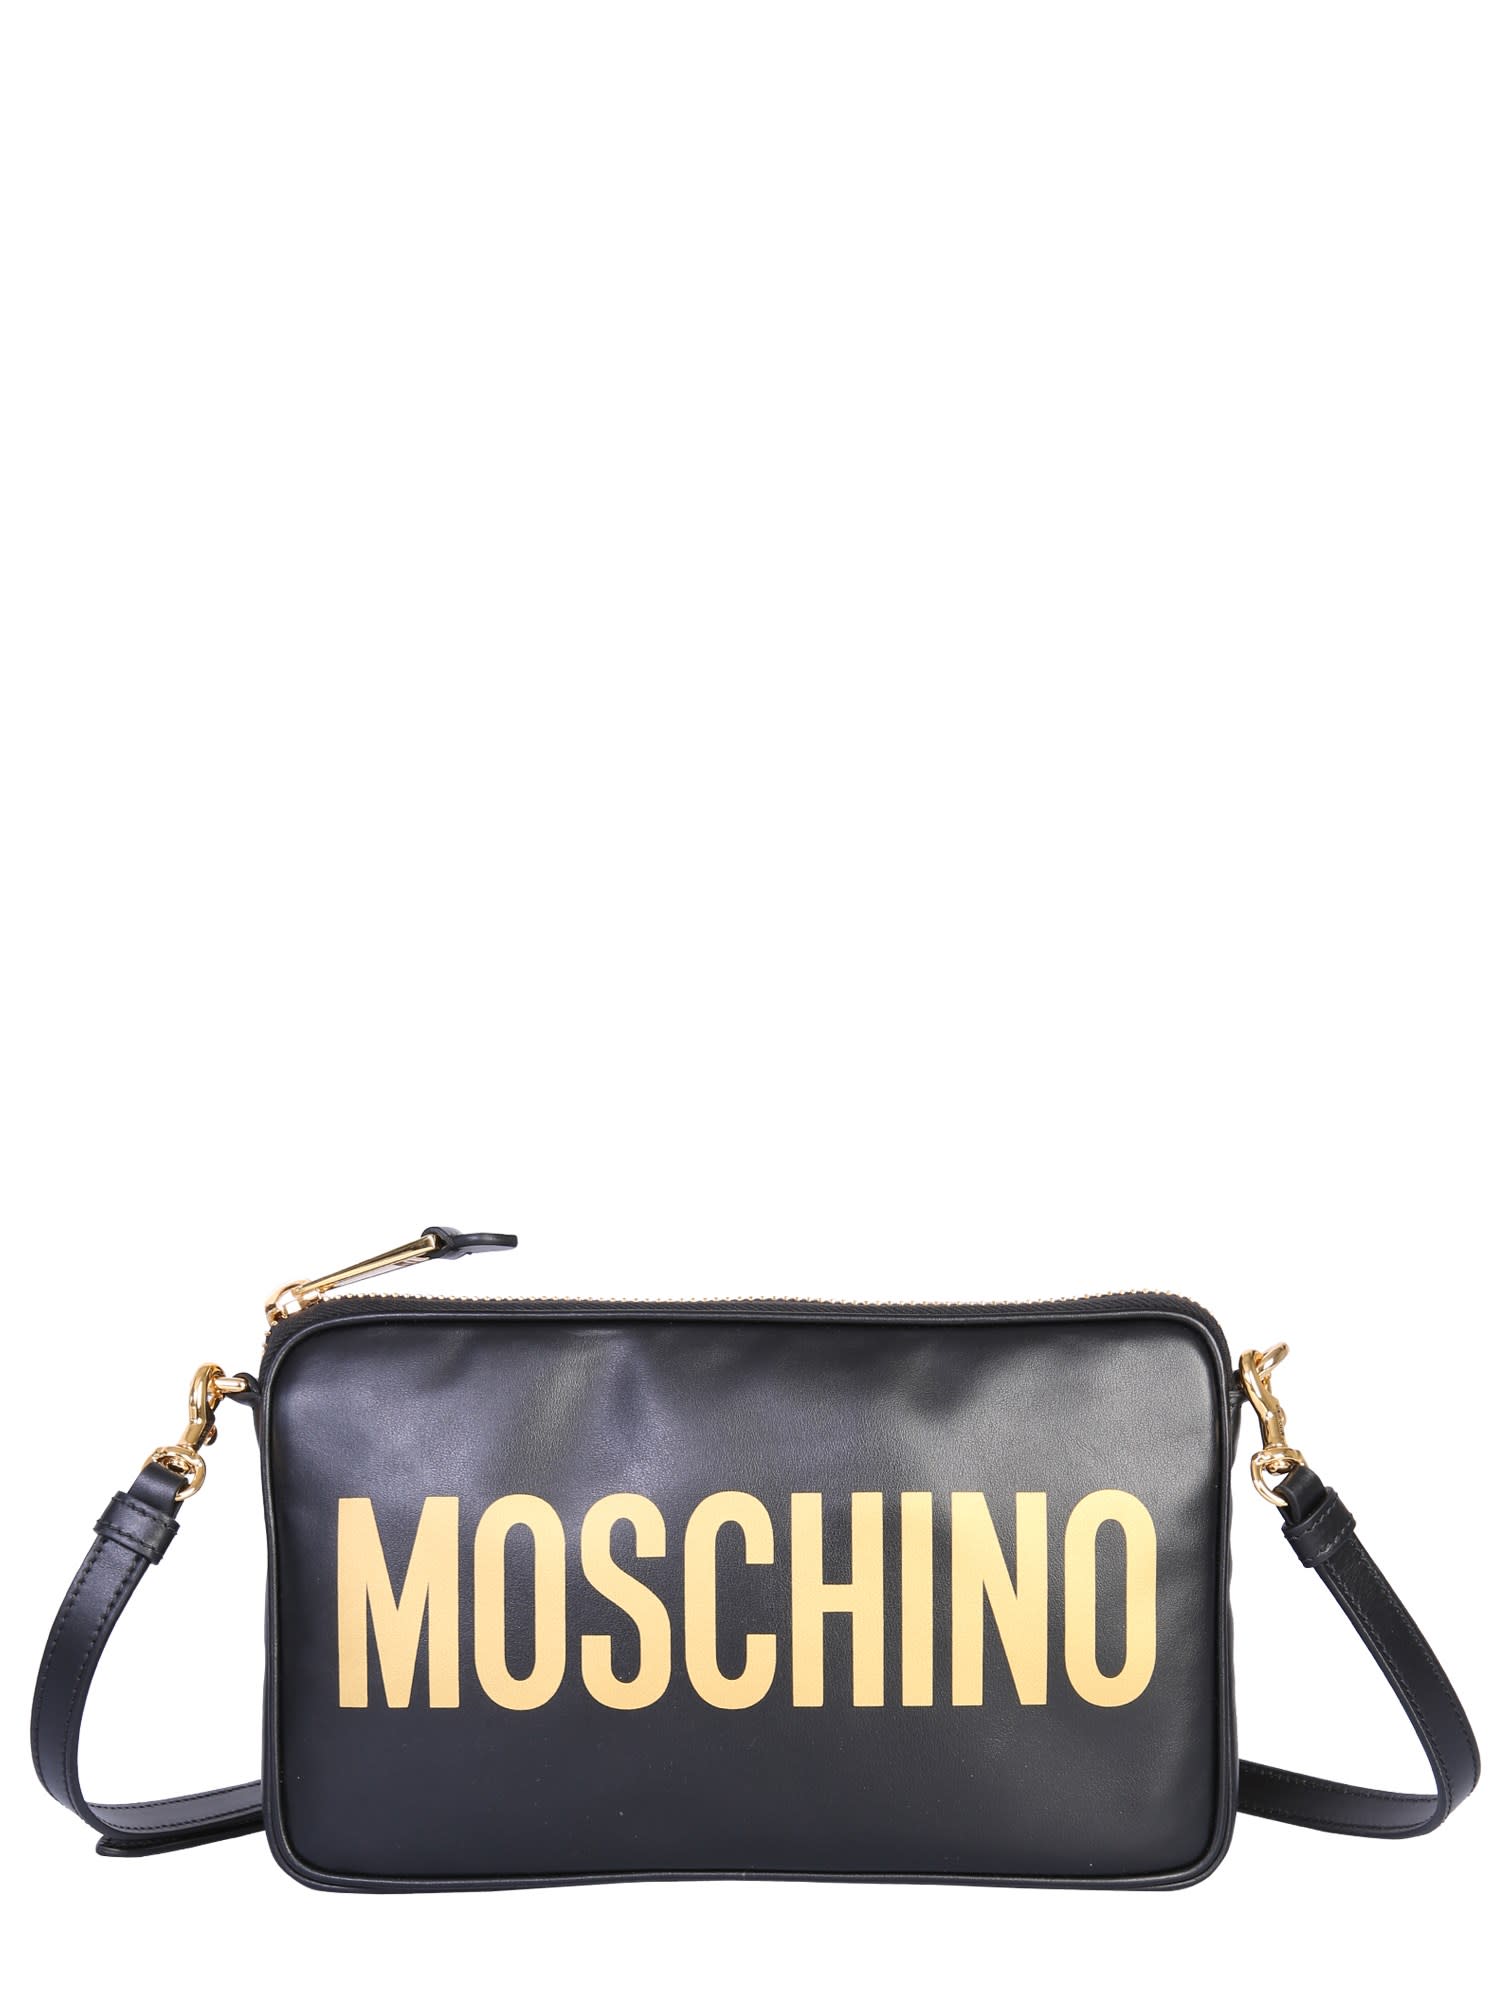 MOSCHINO SHOULDER BAG WITH LOGO,11210235